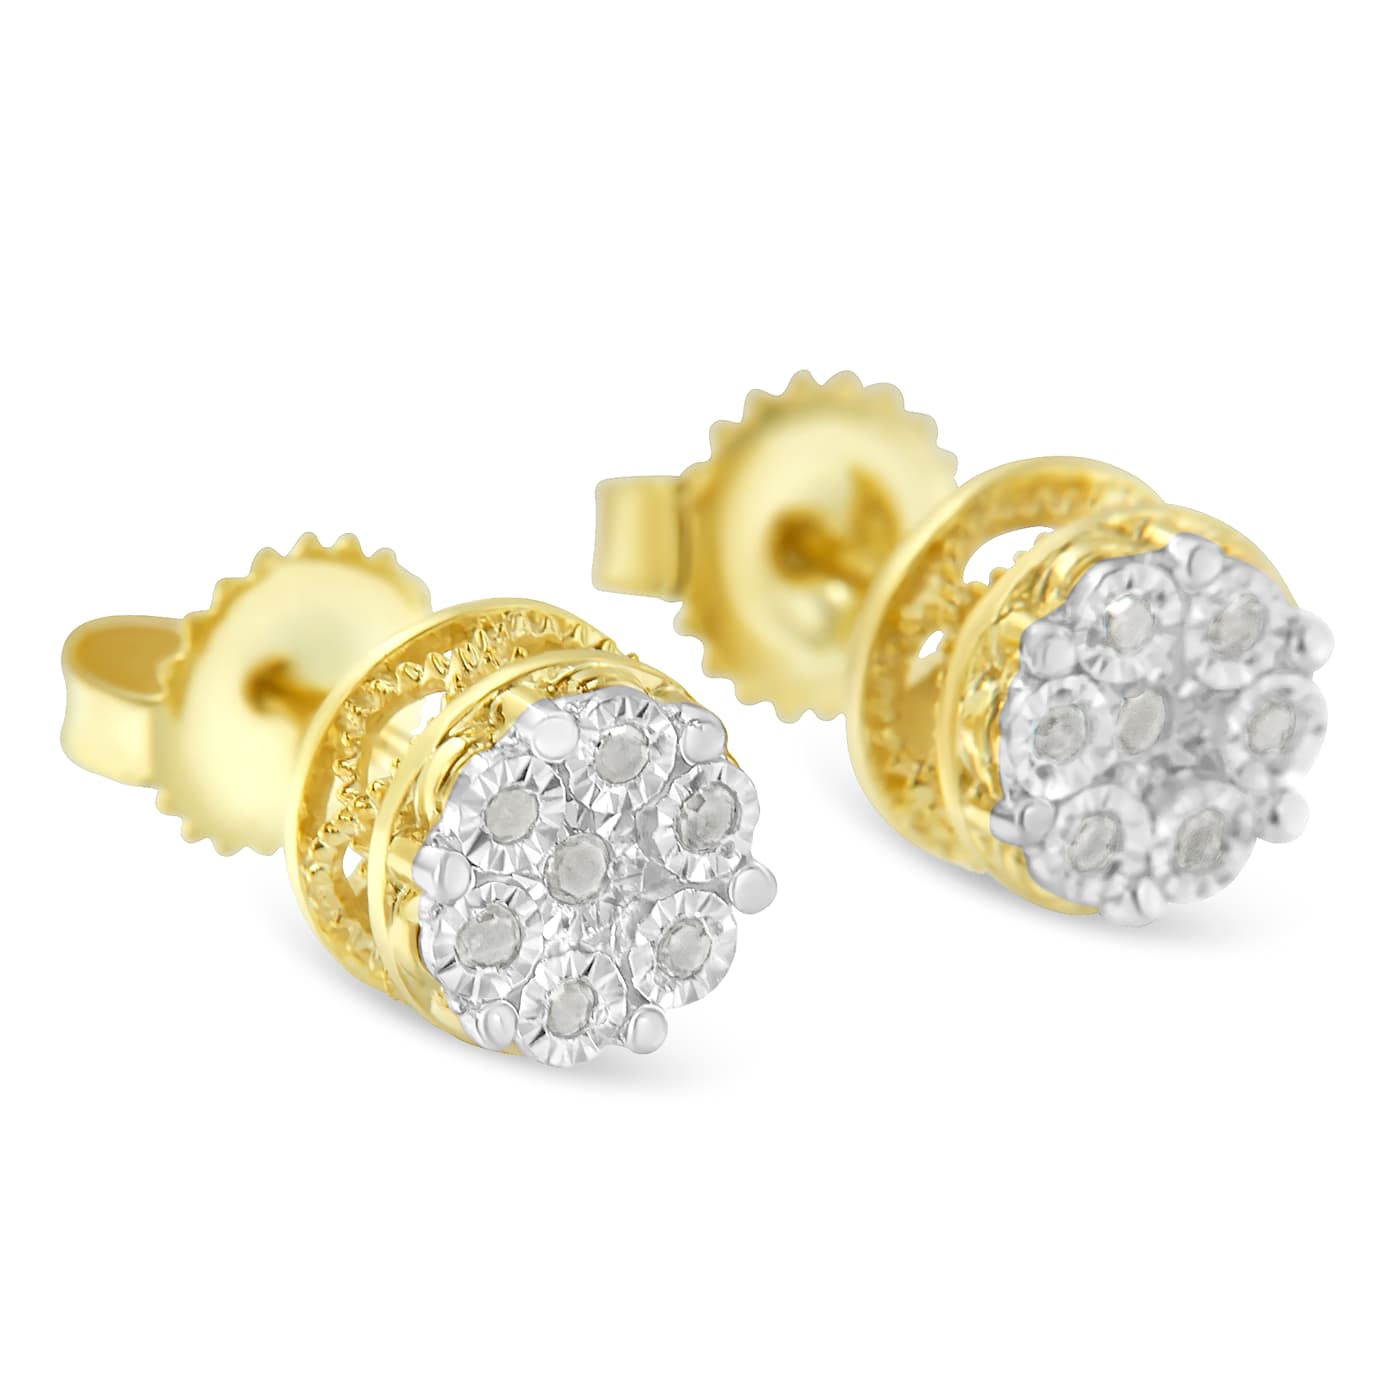 Electric Spark Zig Zag Diamond Earrings in 14K Rose Gold